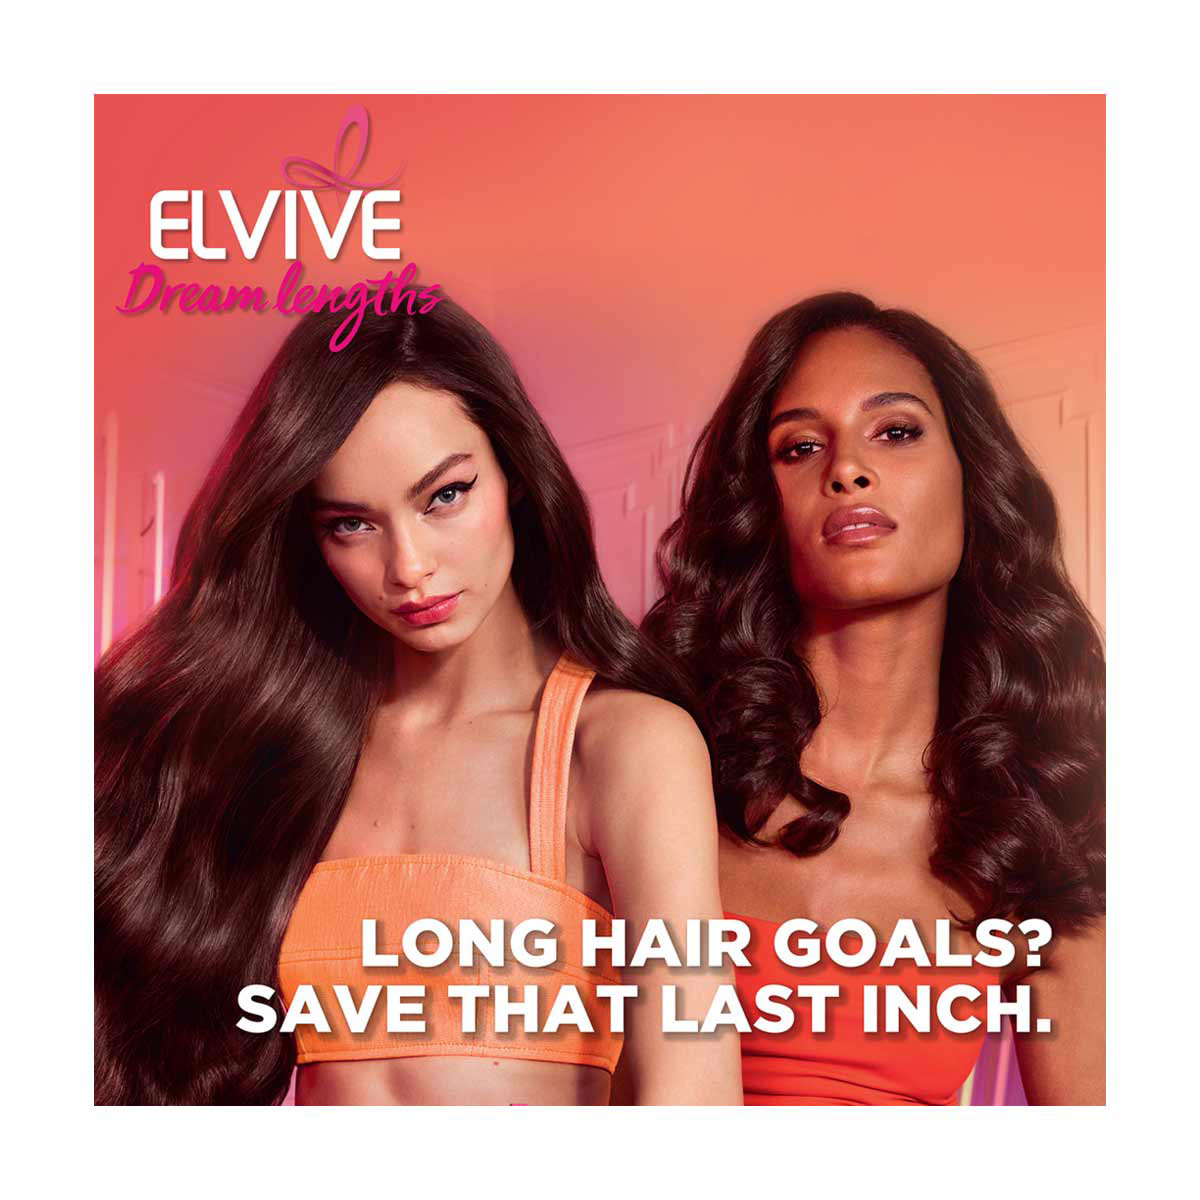 L'Oreal Paris Elvive Dream Lengths Restoring Shampoo for Long, Damaged Hair, 12.6 fl oz